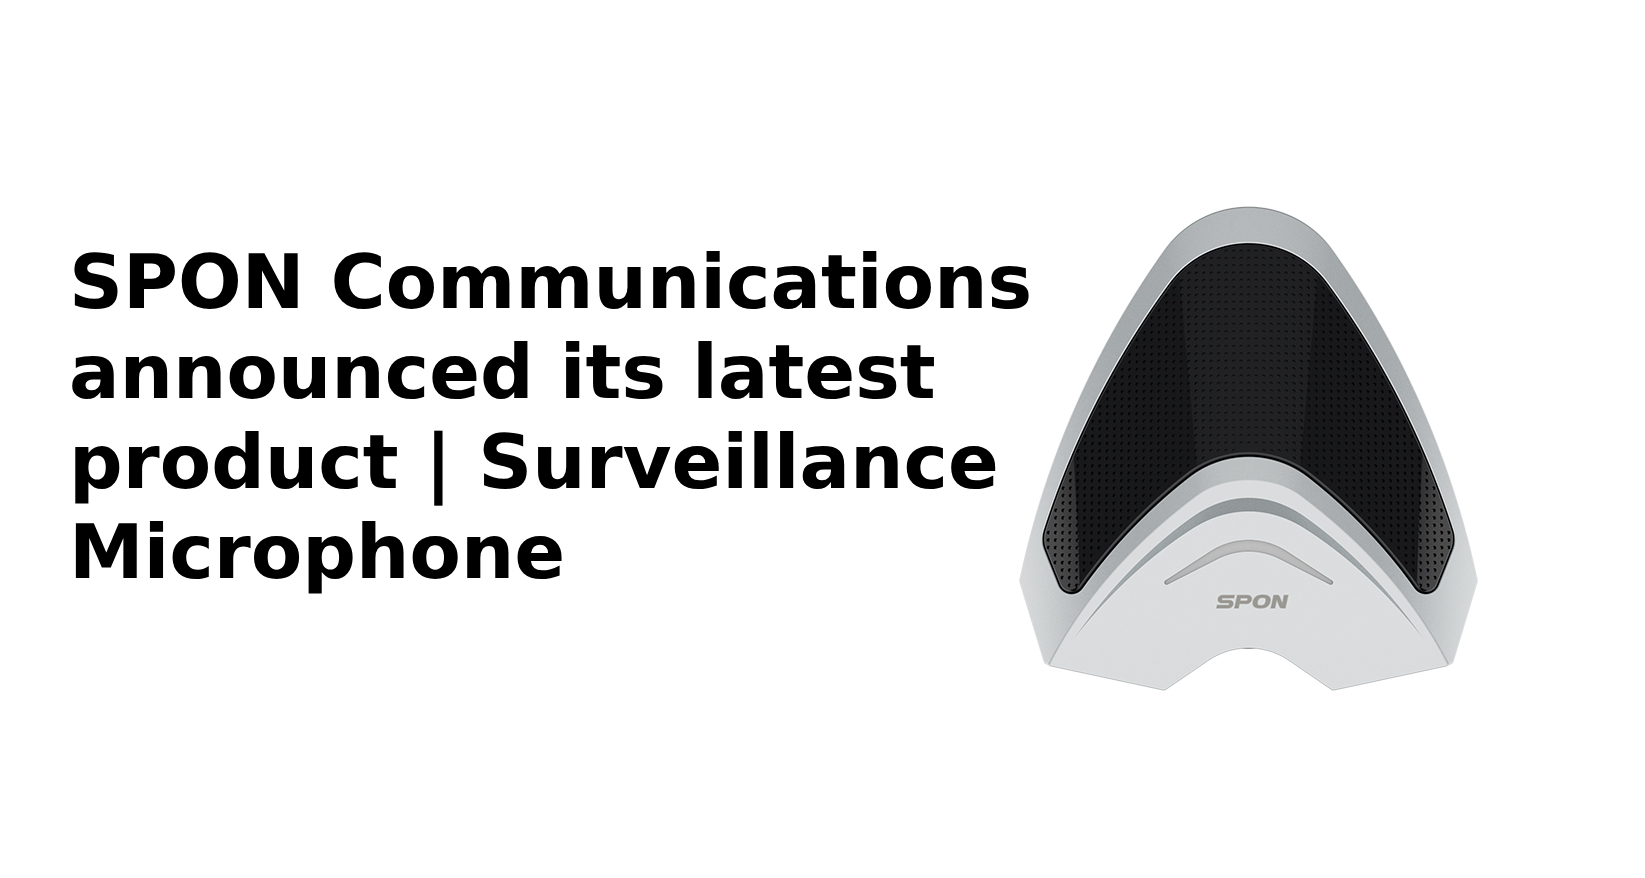 SPON Communications announced its latest product _ Surveillance Microphone